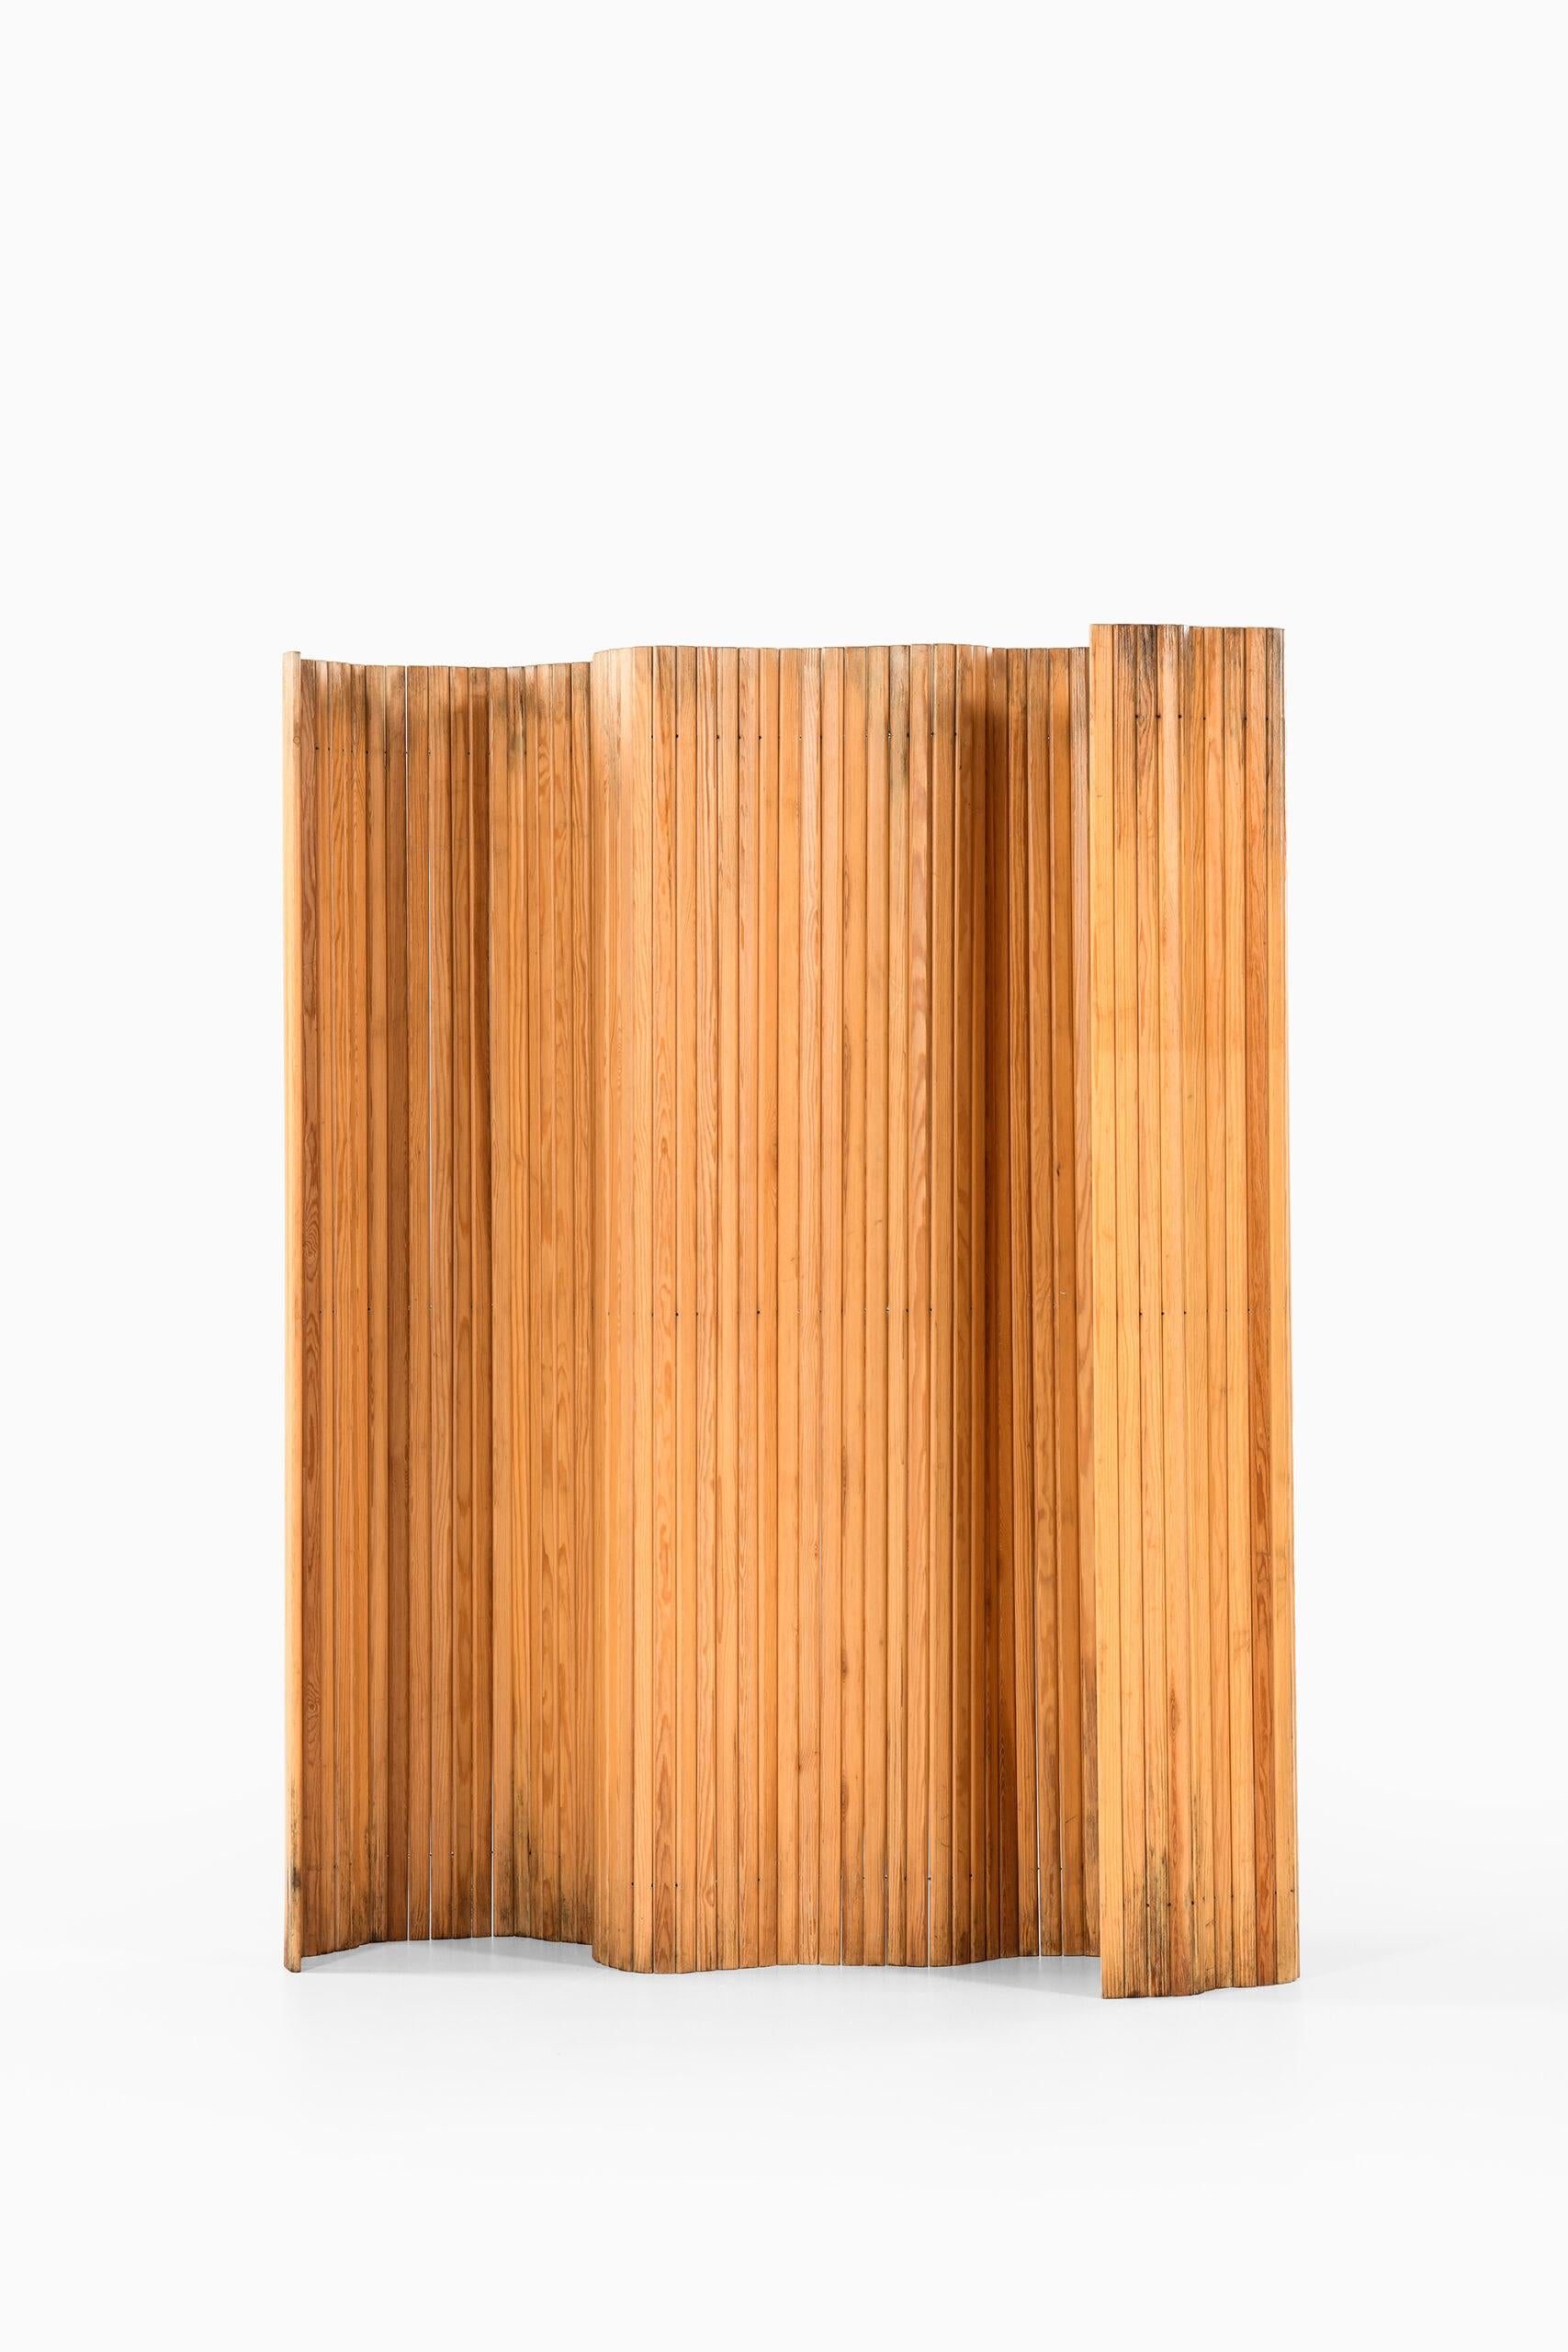 Scandinavian Modern Alvar Aalto Room Divider Model 100 Produced by Artek in Finland For Sale